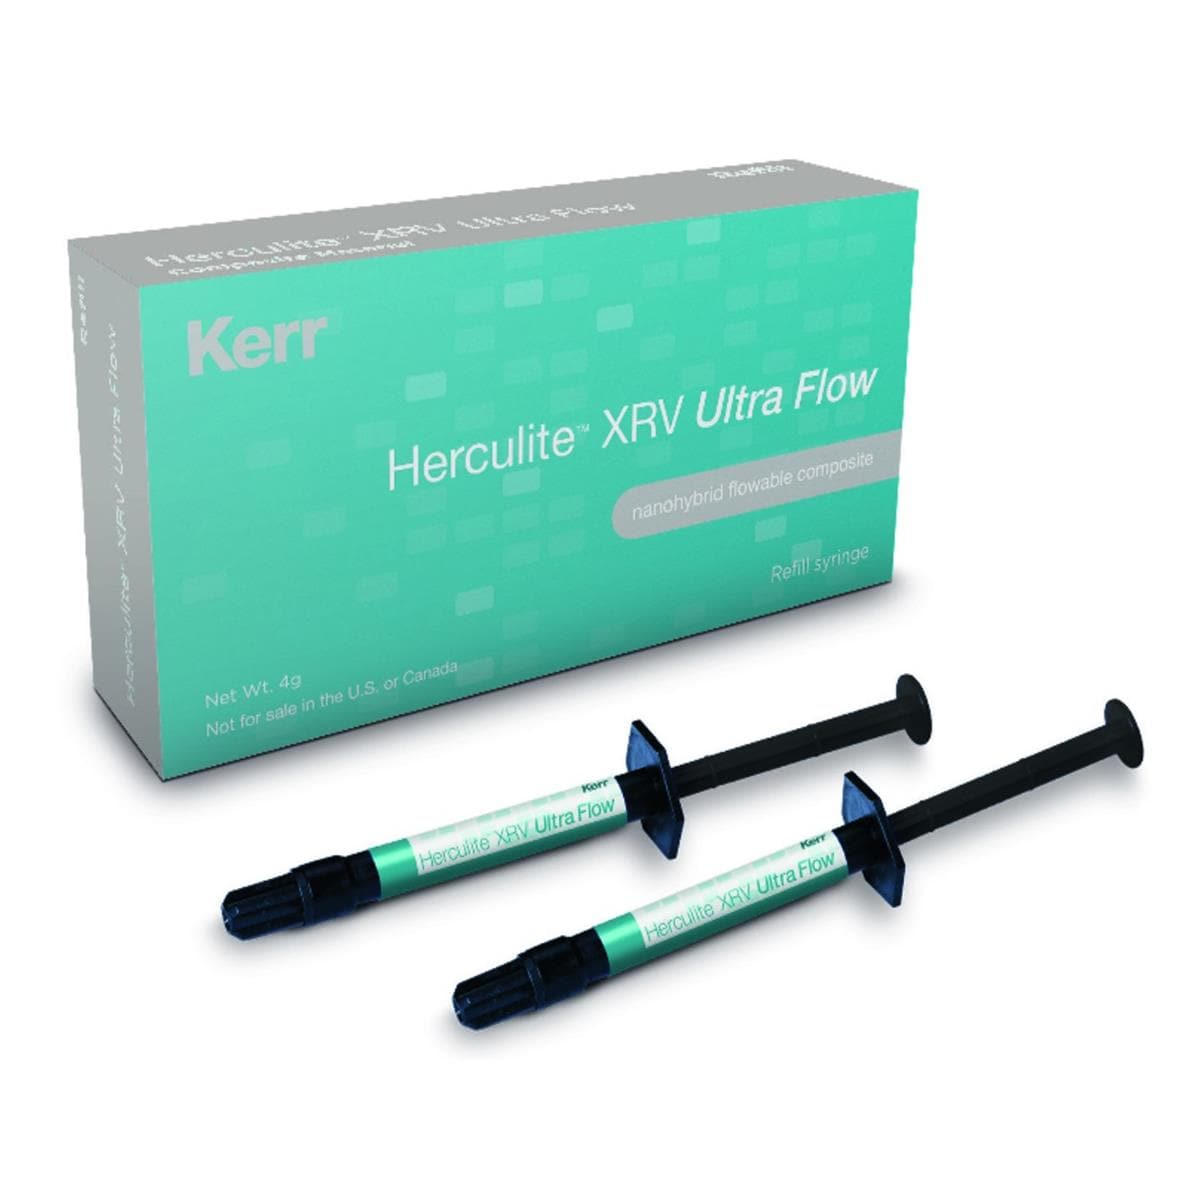 Herculite XRV Ultra Flow KERR - XL1 - Seringue de 2g - Bote de 2